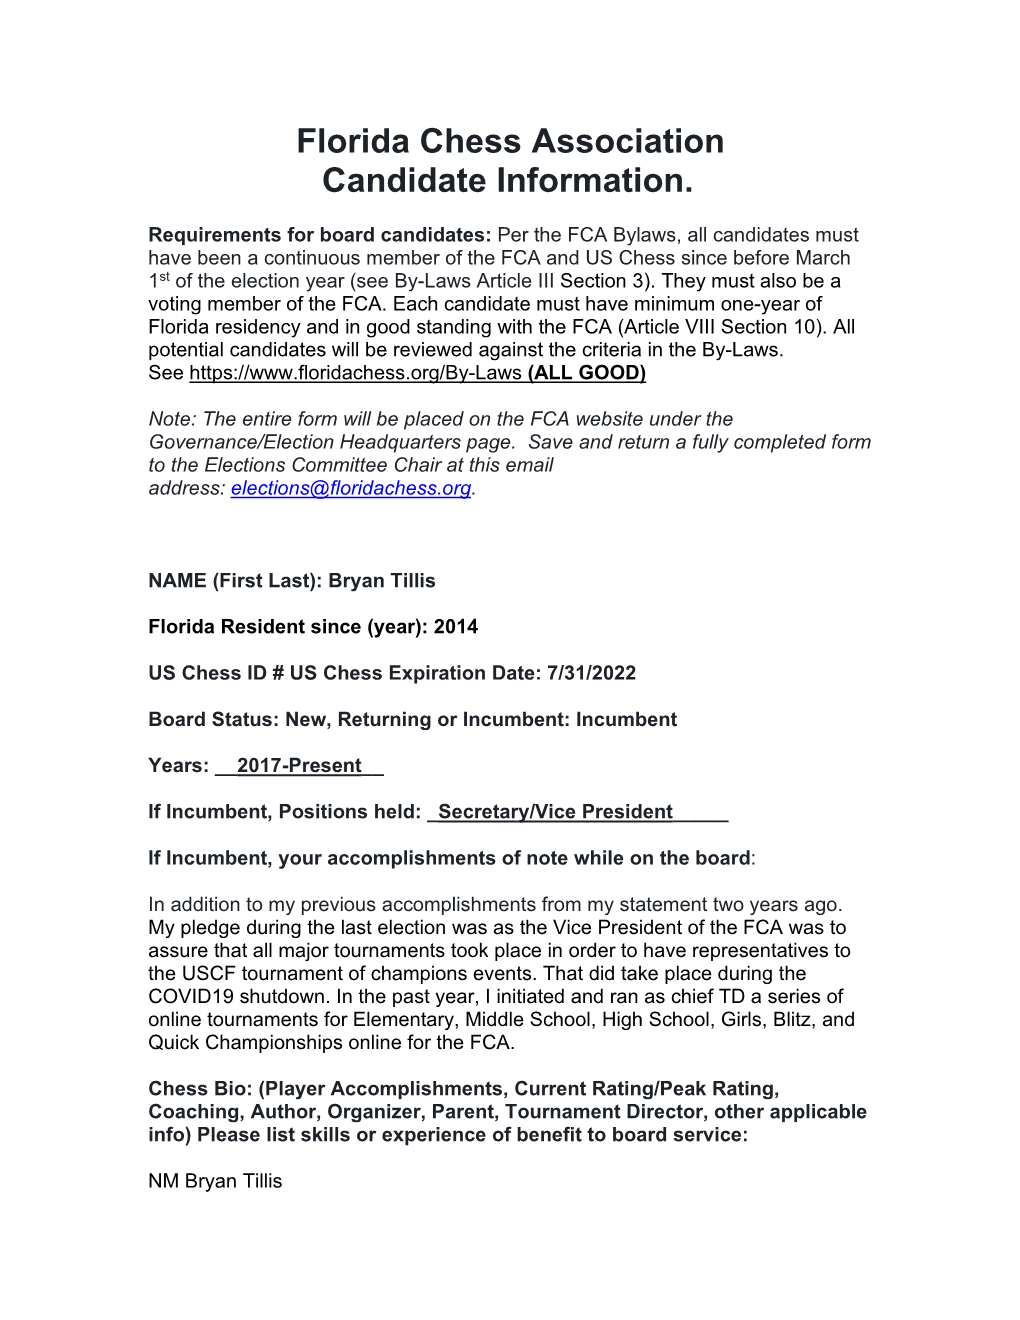 Florida Chess Association Candidate Information